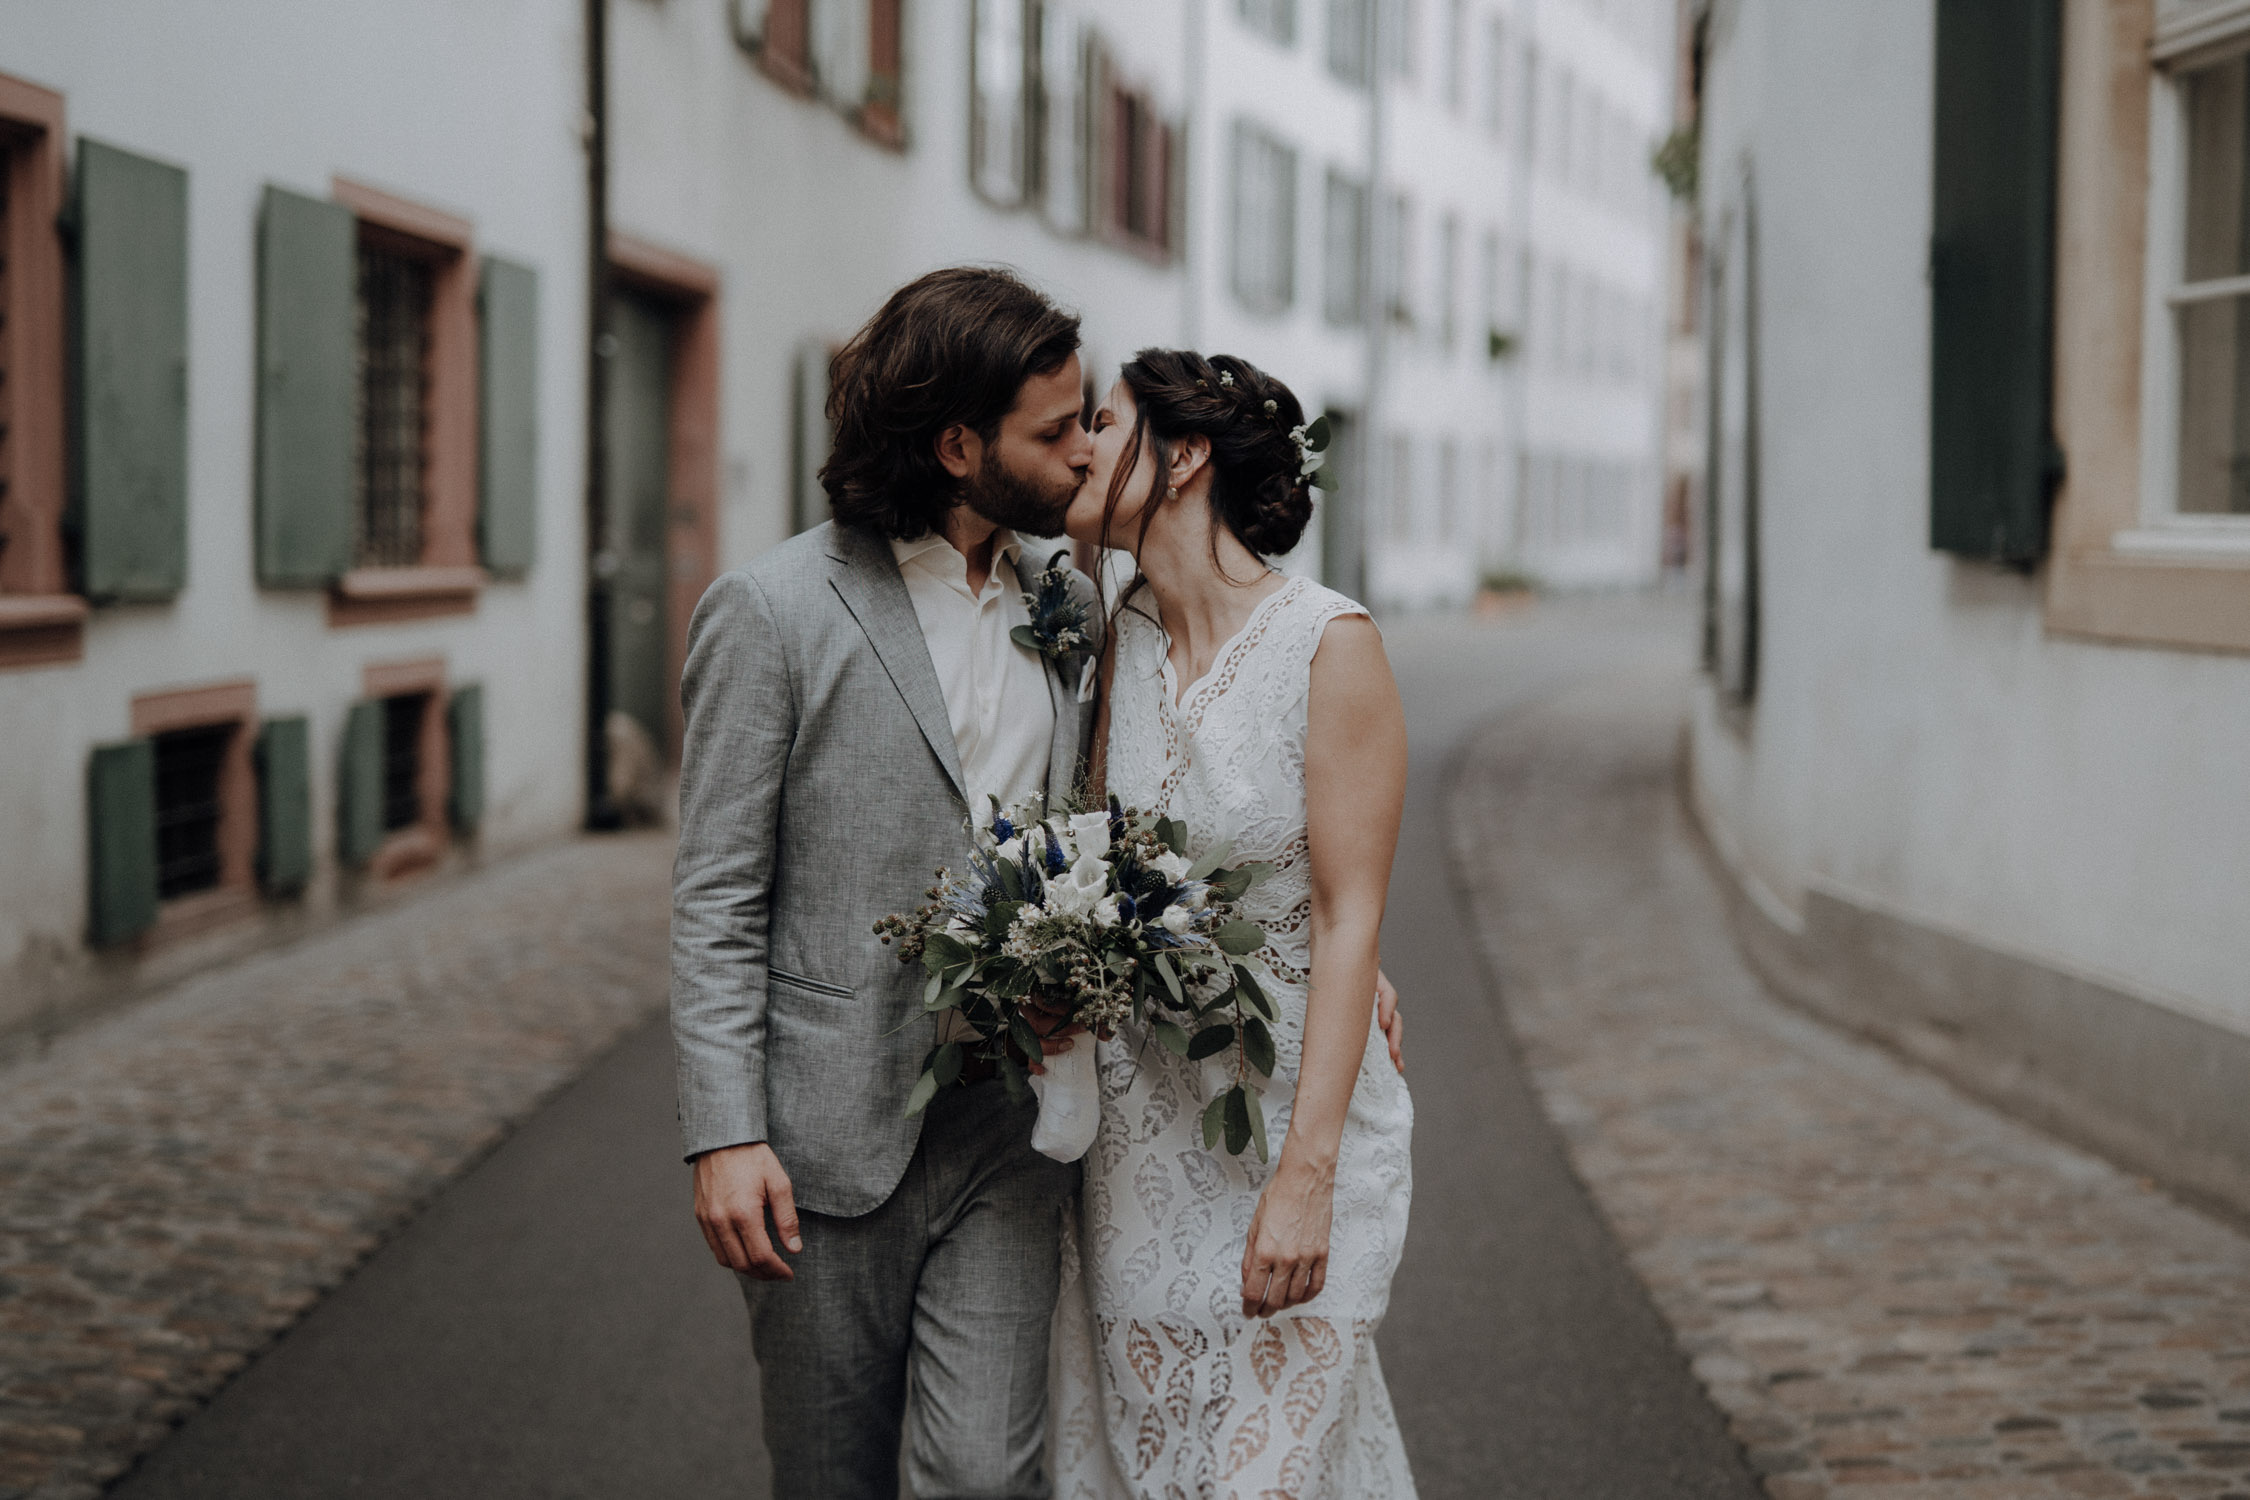 Wedding photographer switzerland basel natural unposed civil wedding old town Basel Minster couple shoot